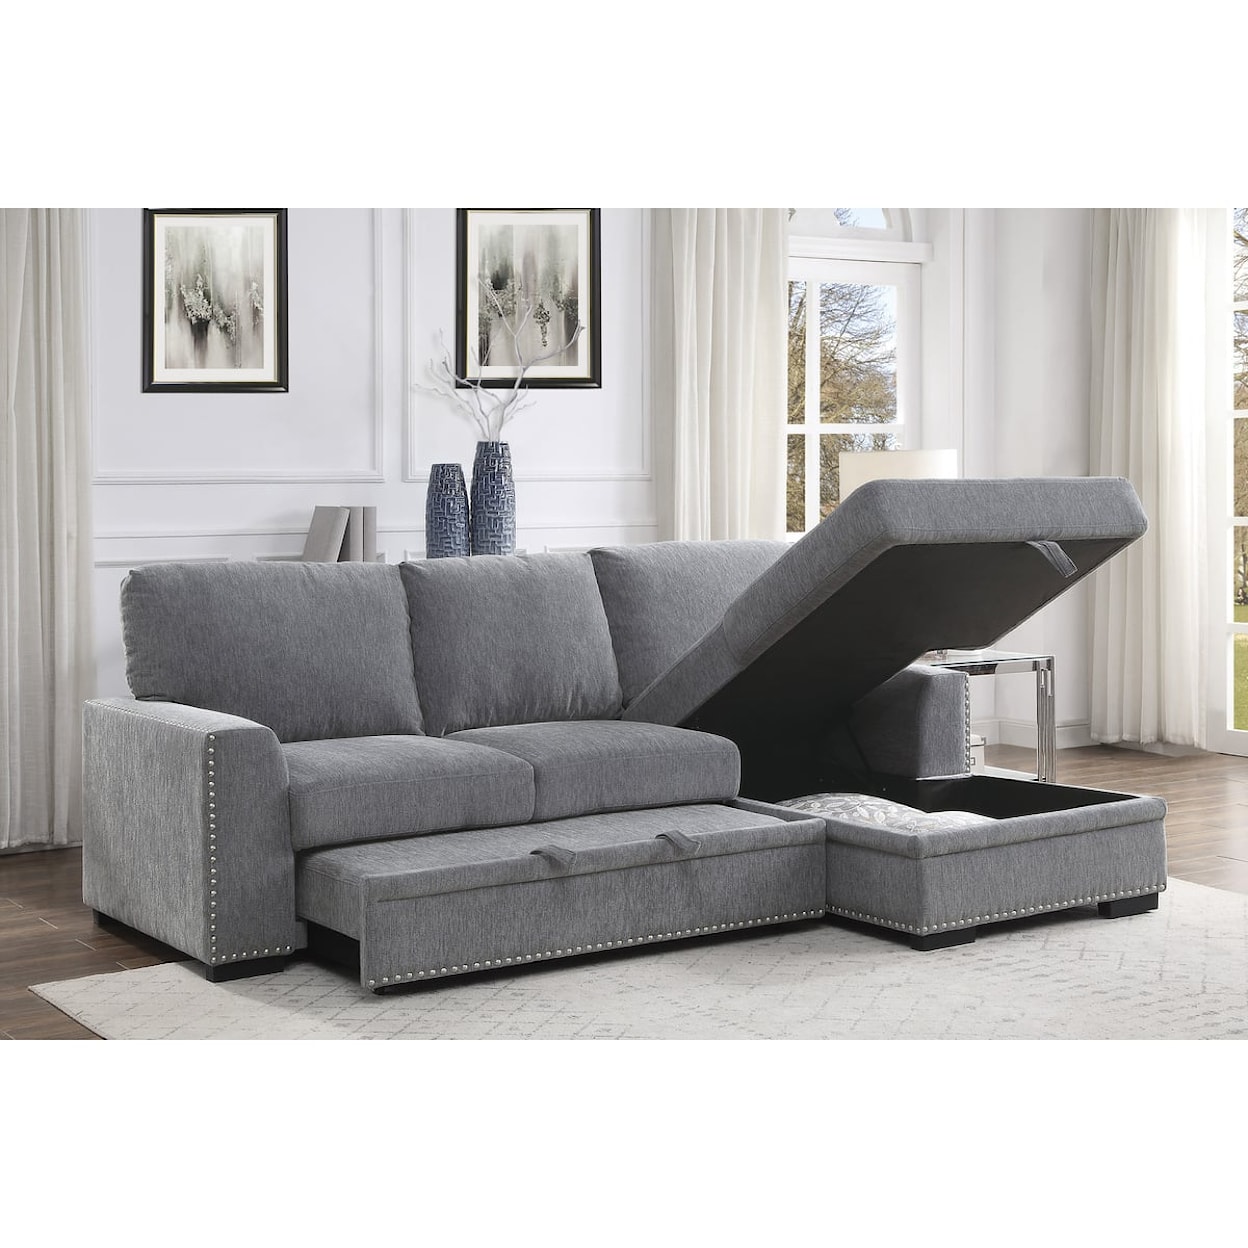 Homelegance Furniture Morelia 2-Piece Sectional Sofa